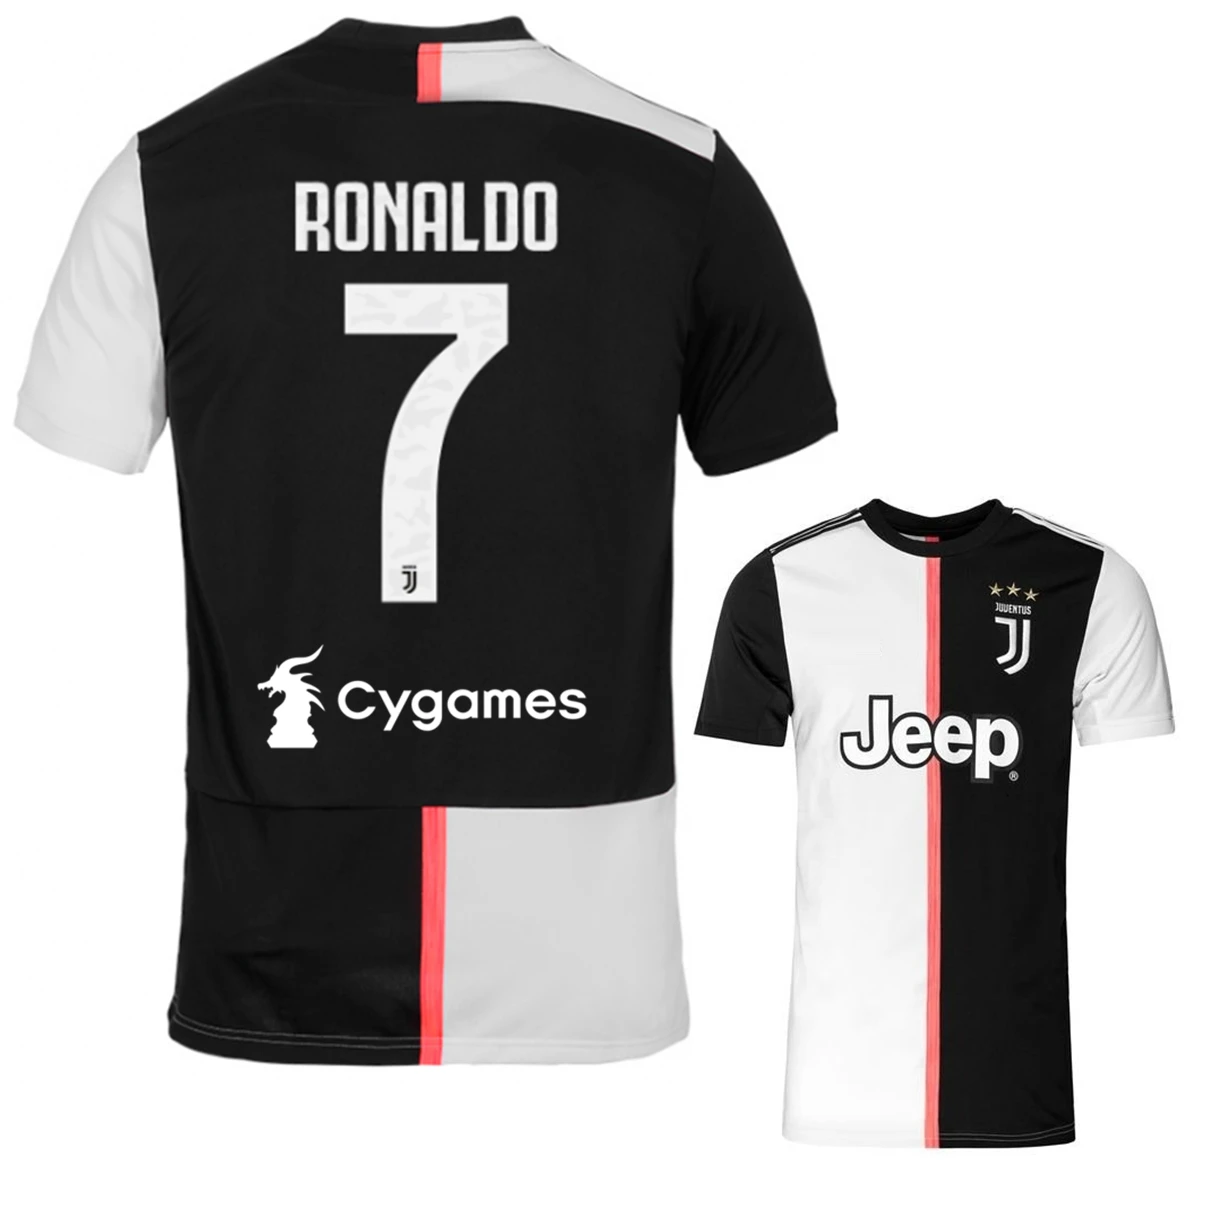 ronaldo juventus jersey original